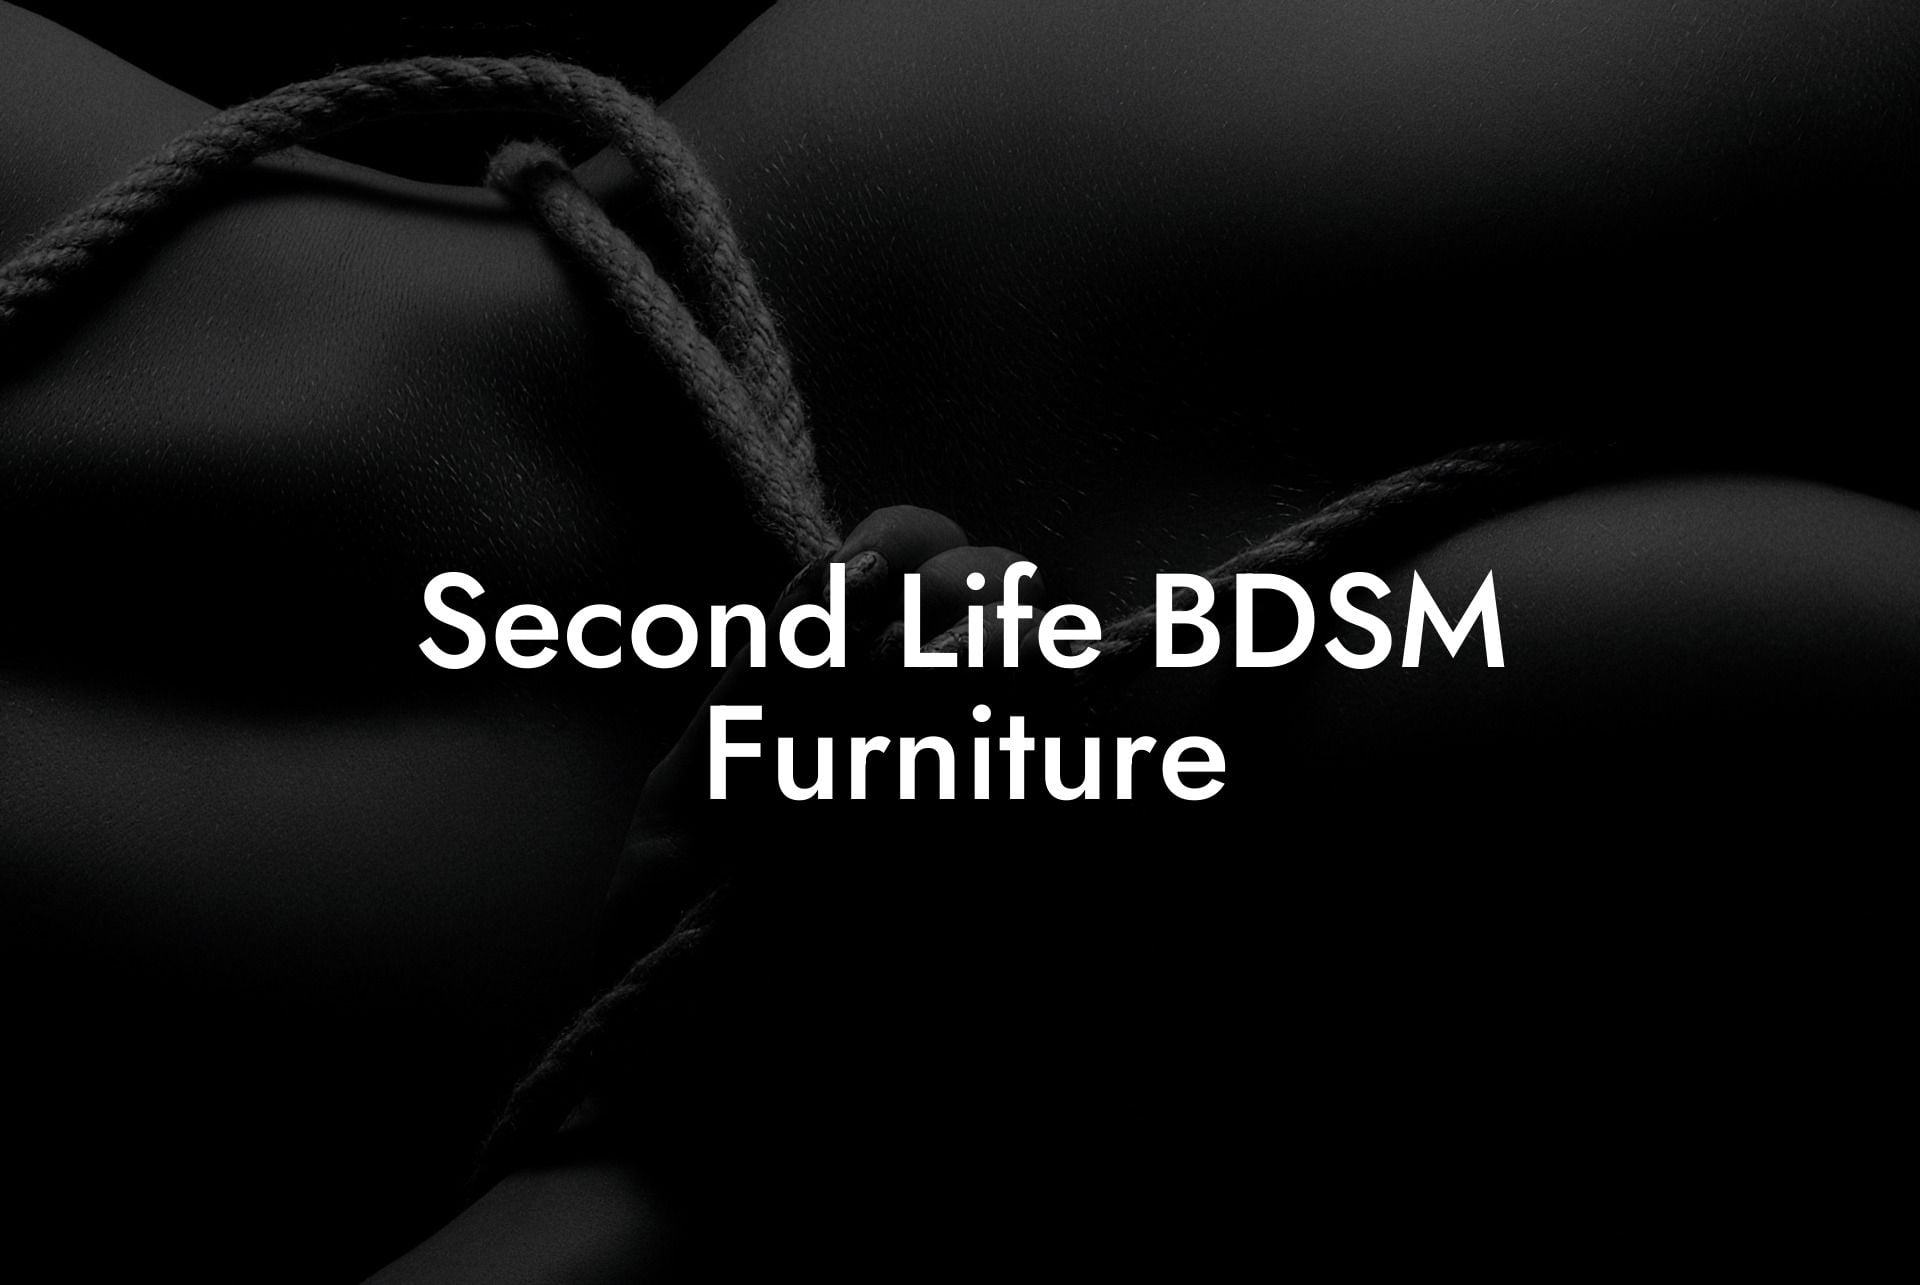 Second Life BDSM Furniture